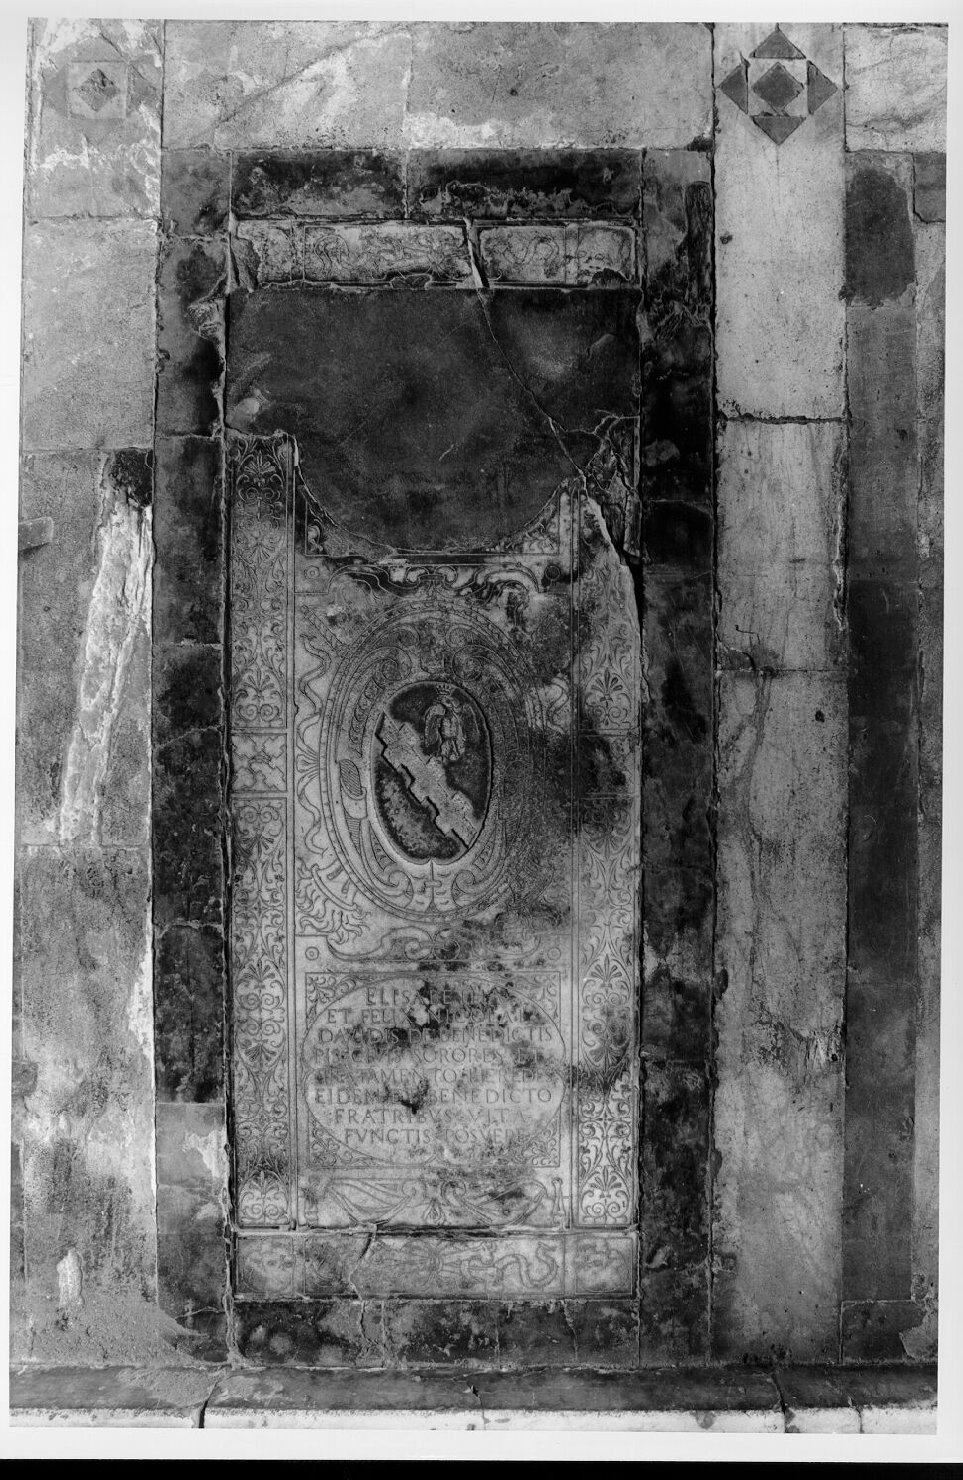 Elisabetta e Felice Nicolai di Davide de Benedictis (lastra tombale) - bottega pisana (sec. XVII)